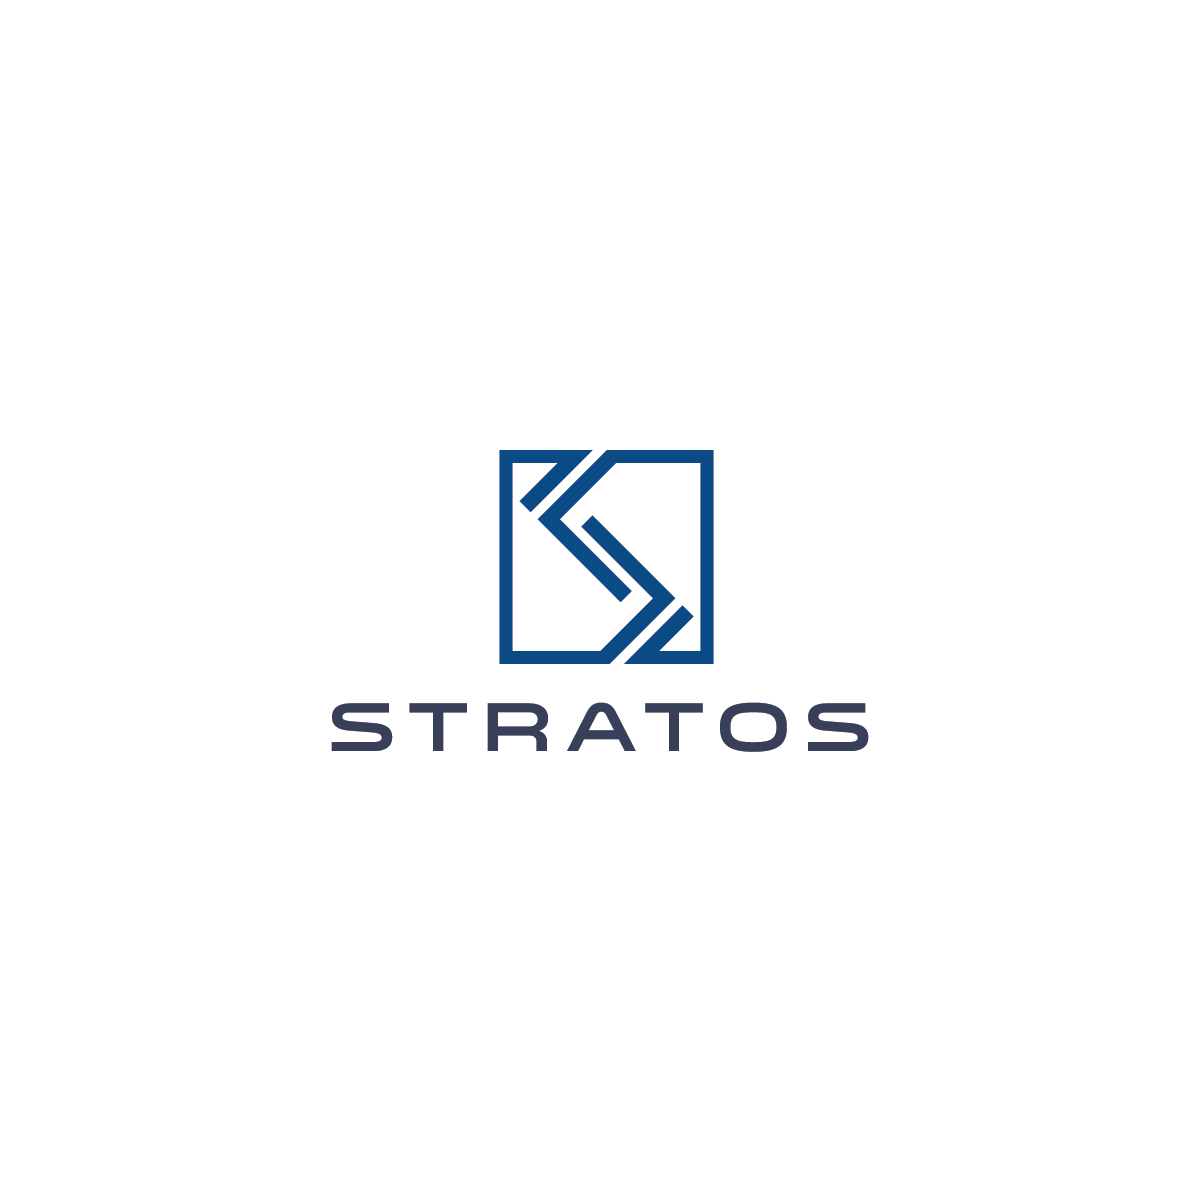 Stratos Logo - Masculine, Bold Logo Design for STRATOS by Mojoto41 | Design #19070782